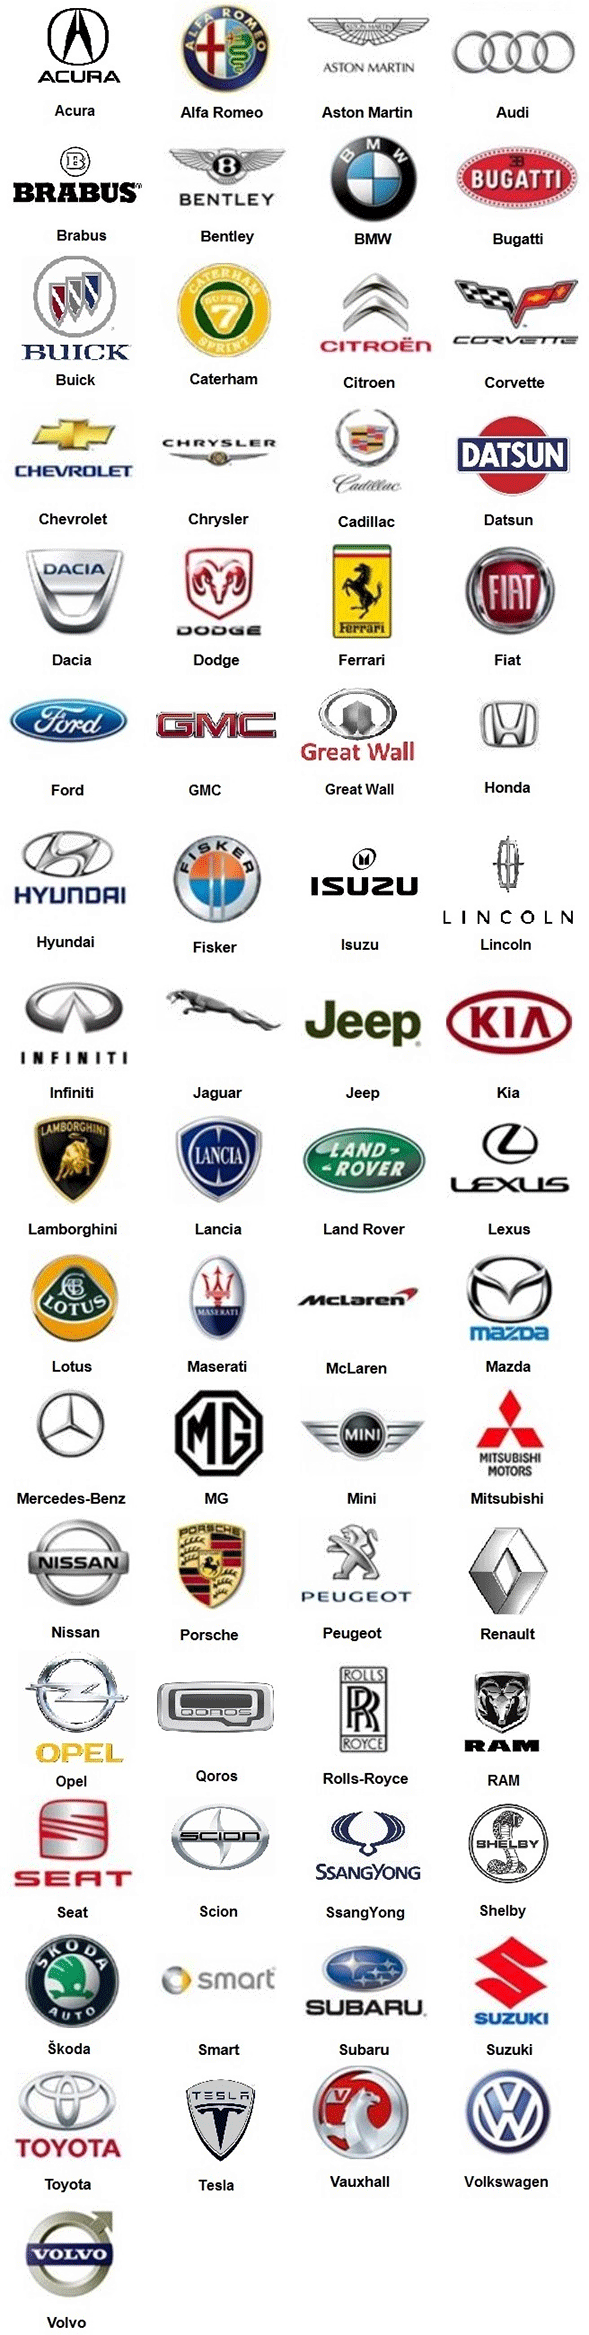 Silva Car Logo - Stuff to Buy. Automóvil, Autos